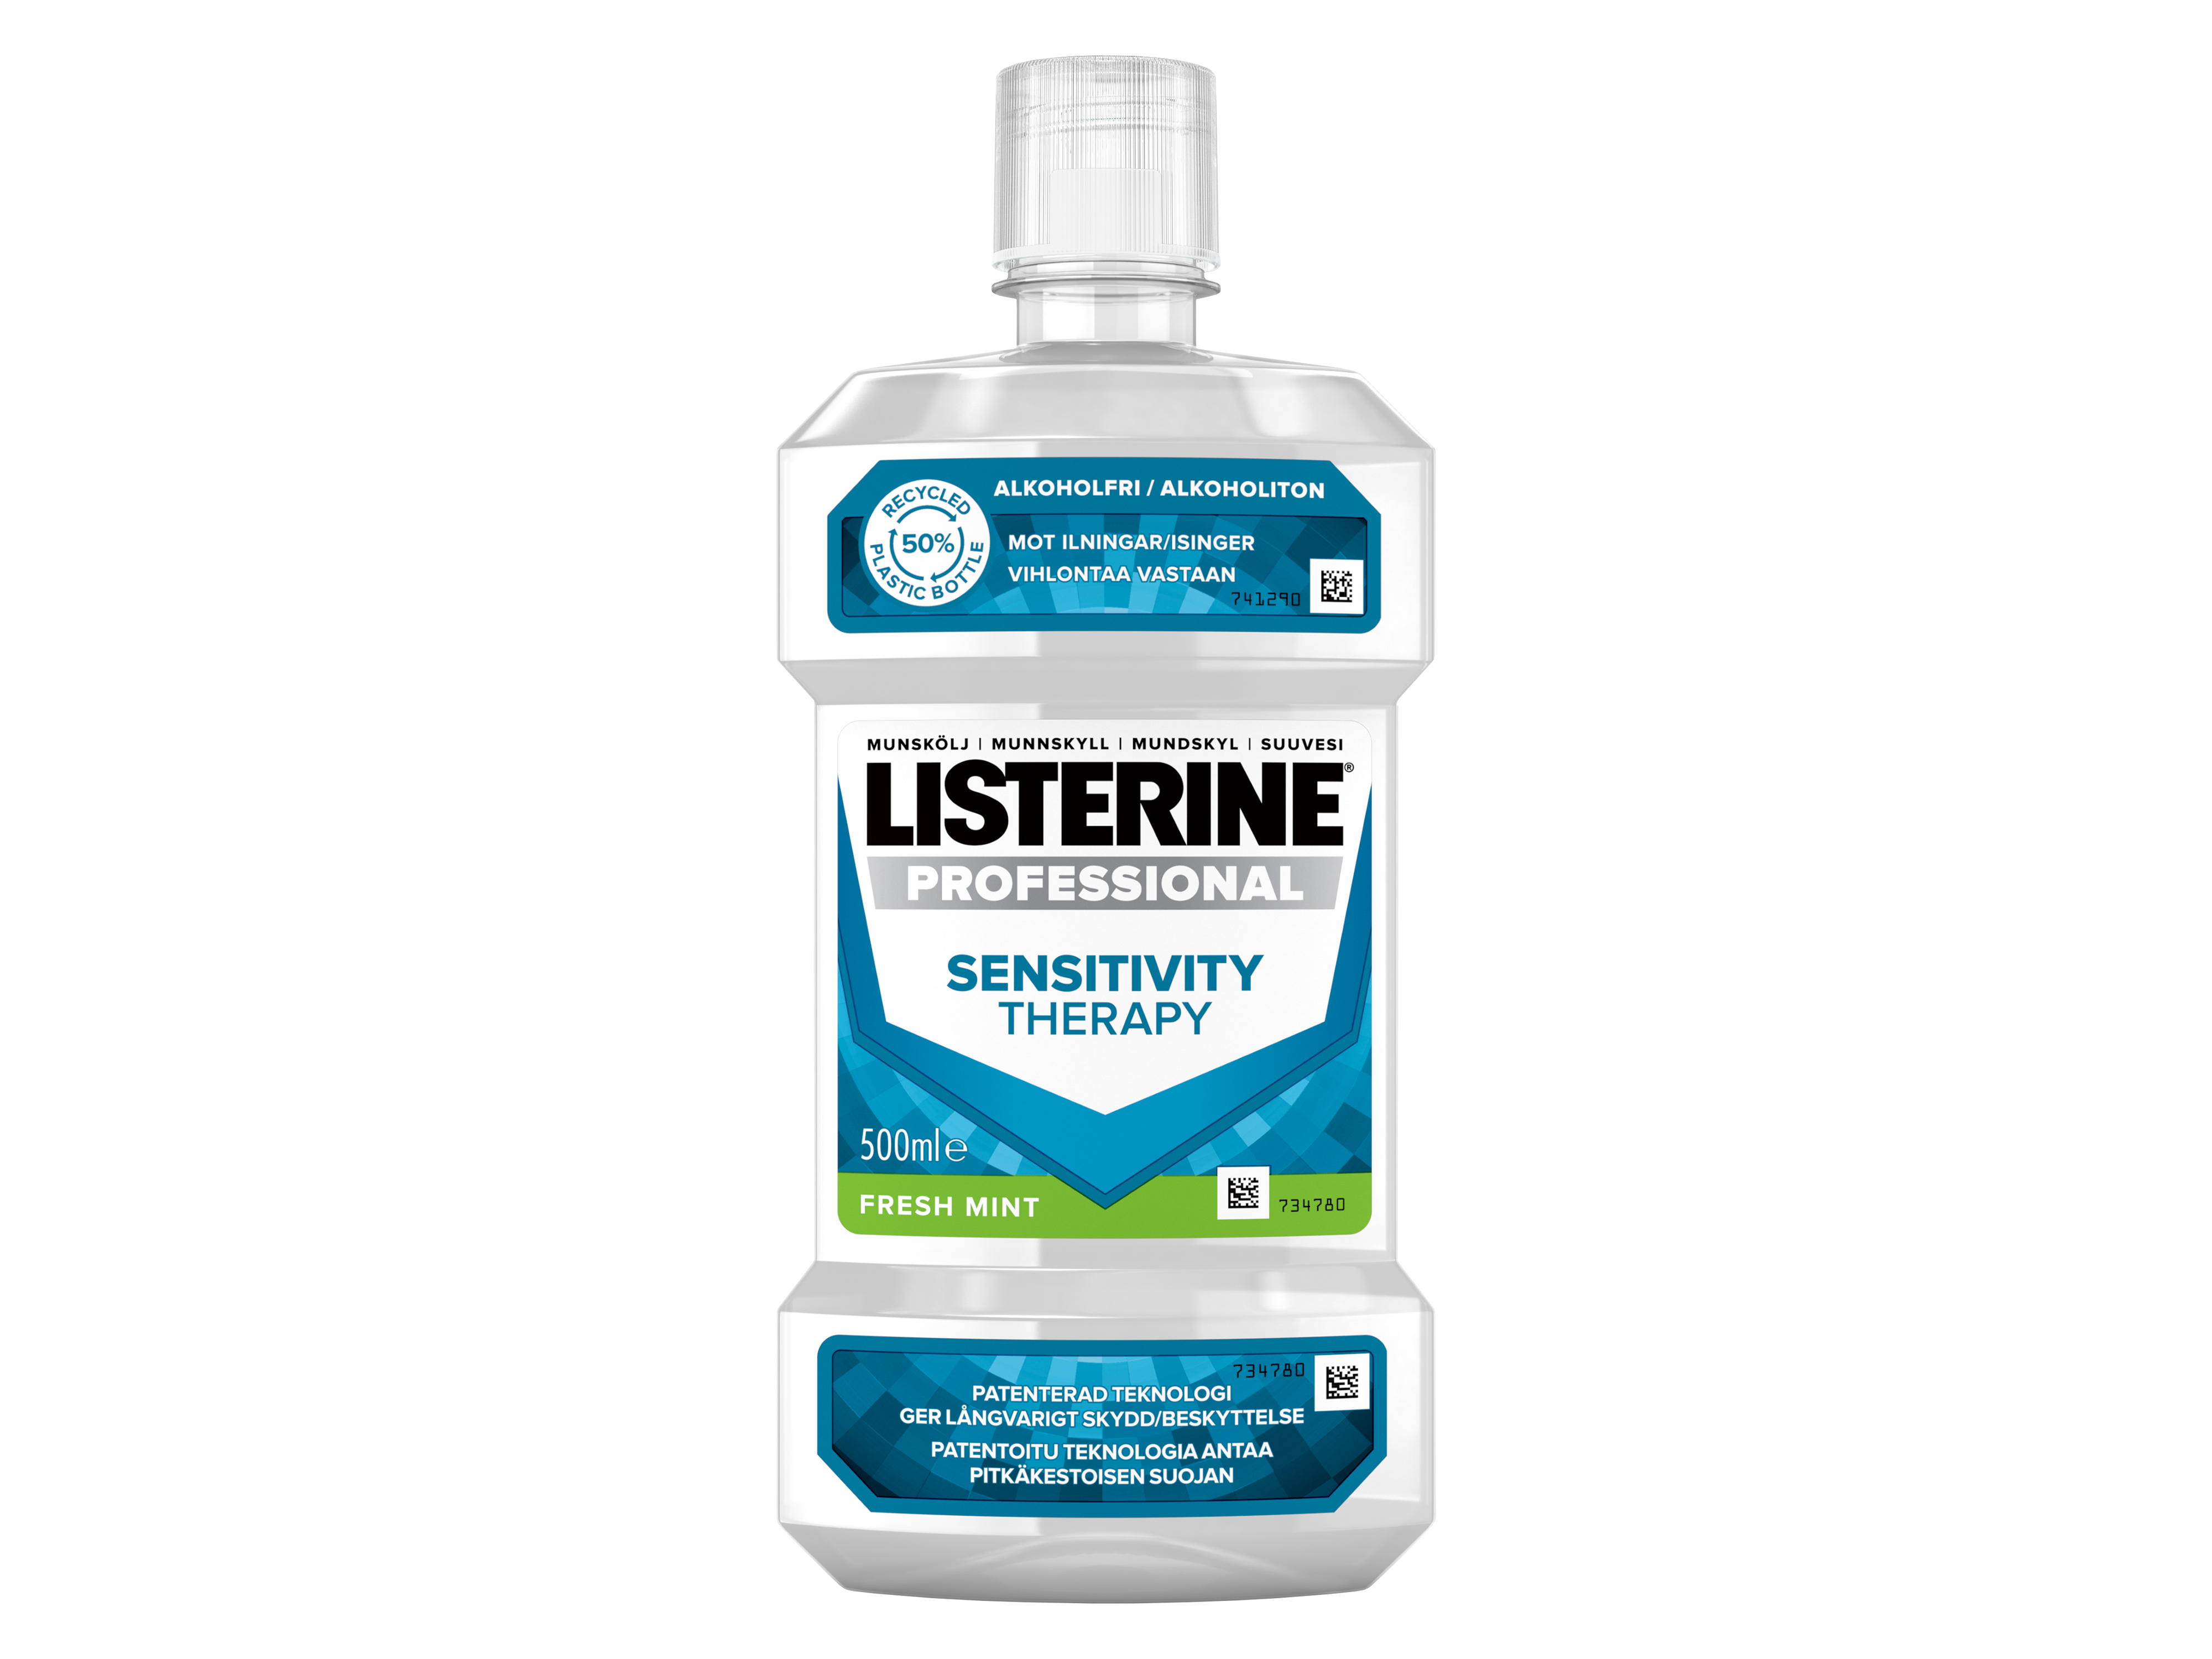 Listerine Prof sensit therapy, 500 ml